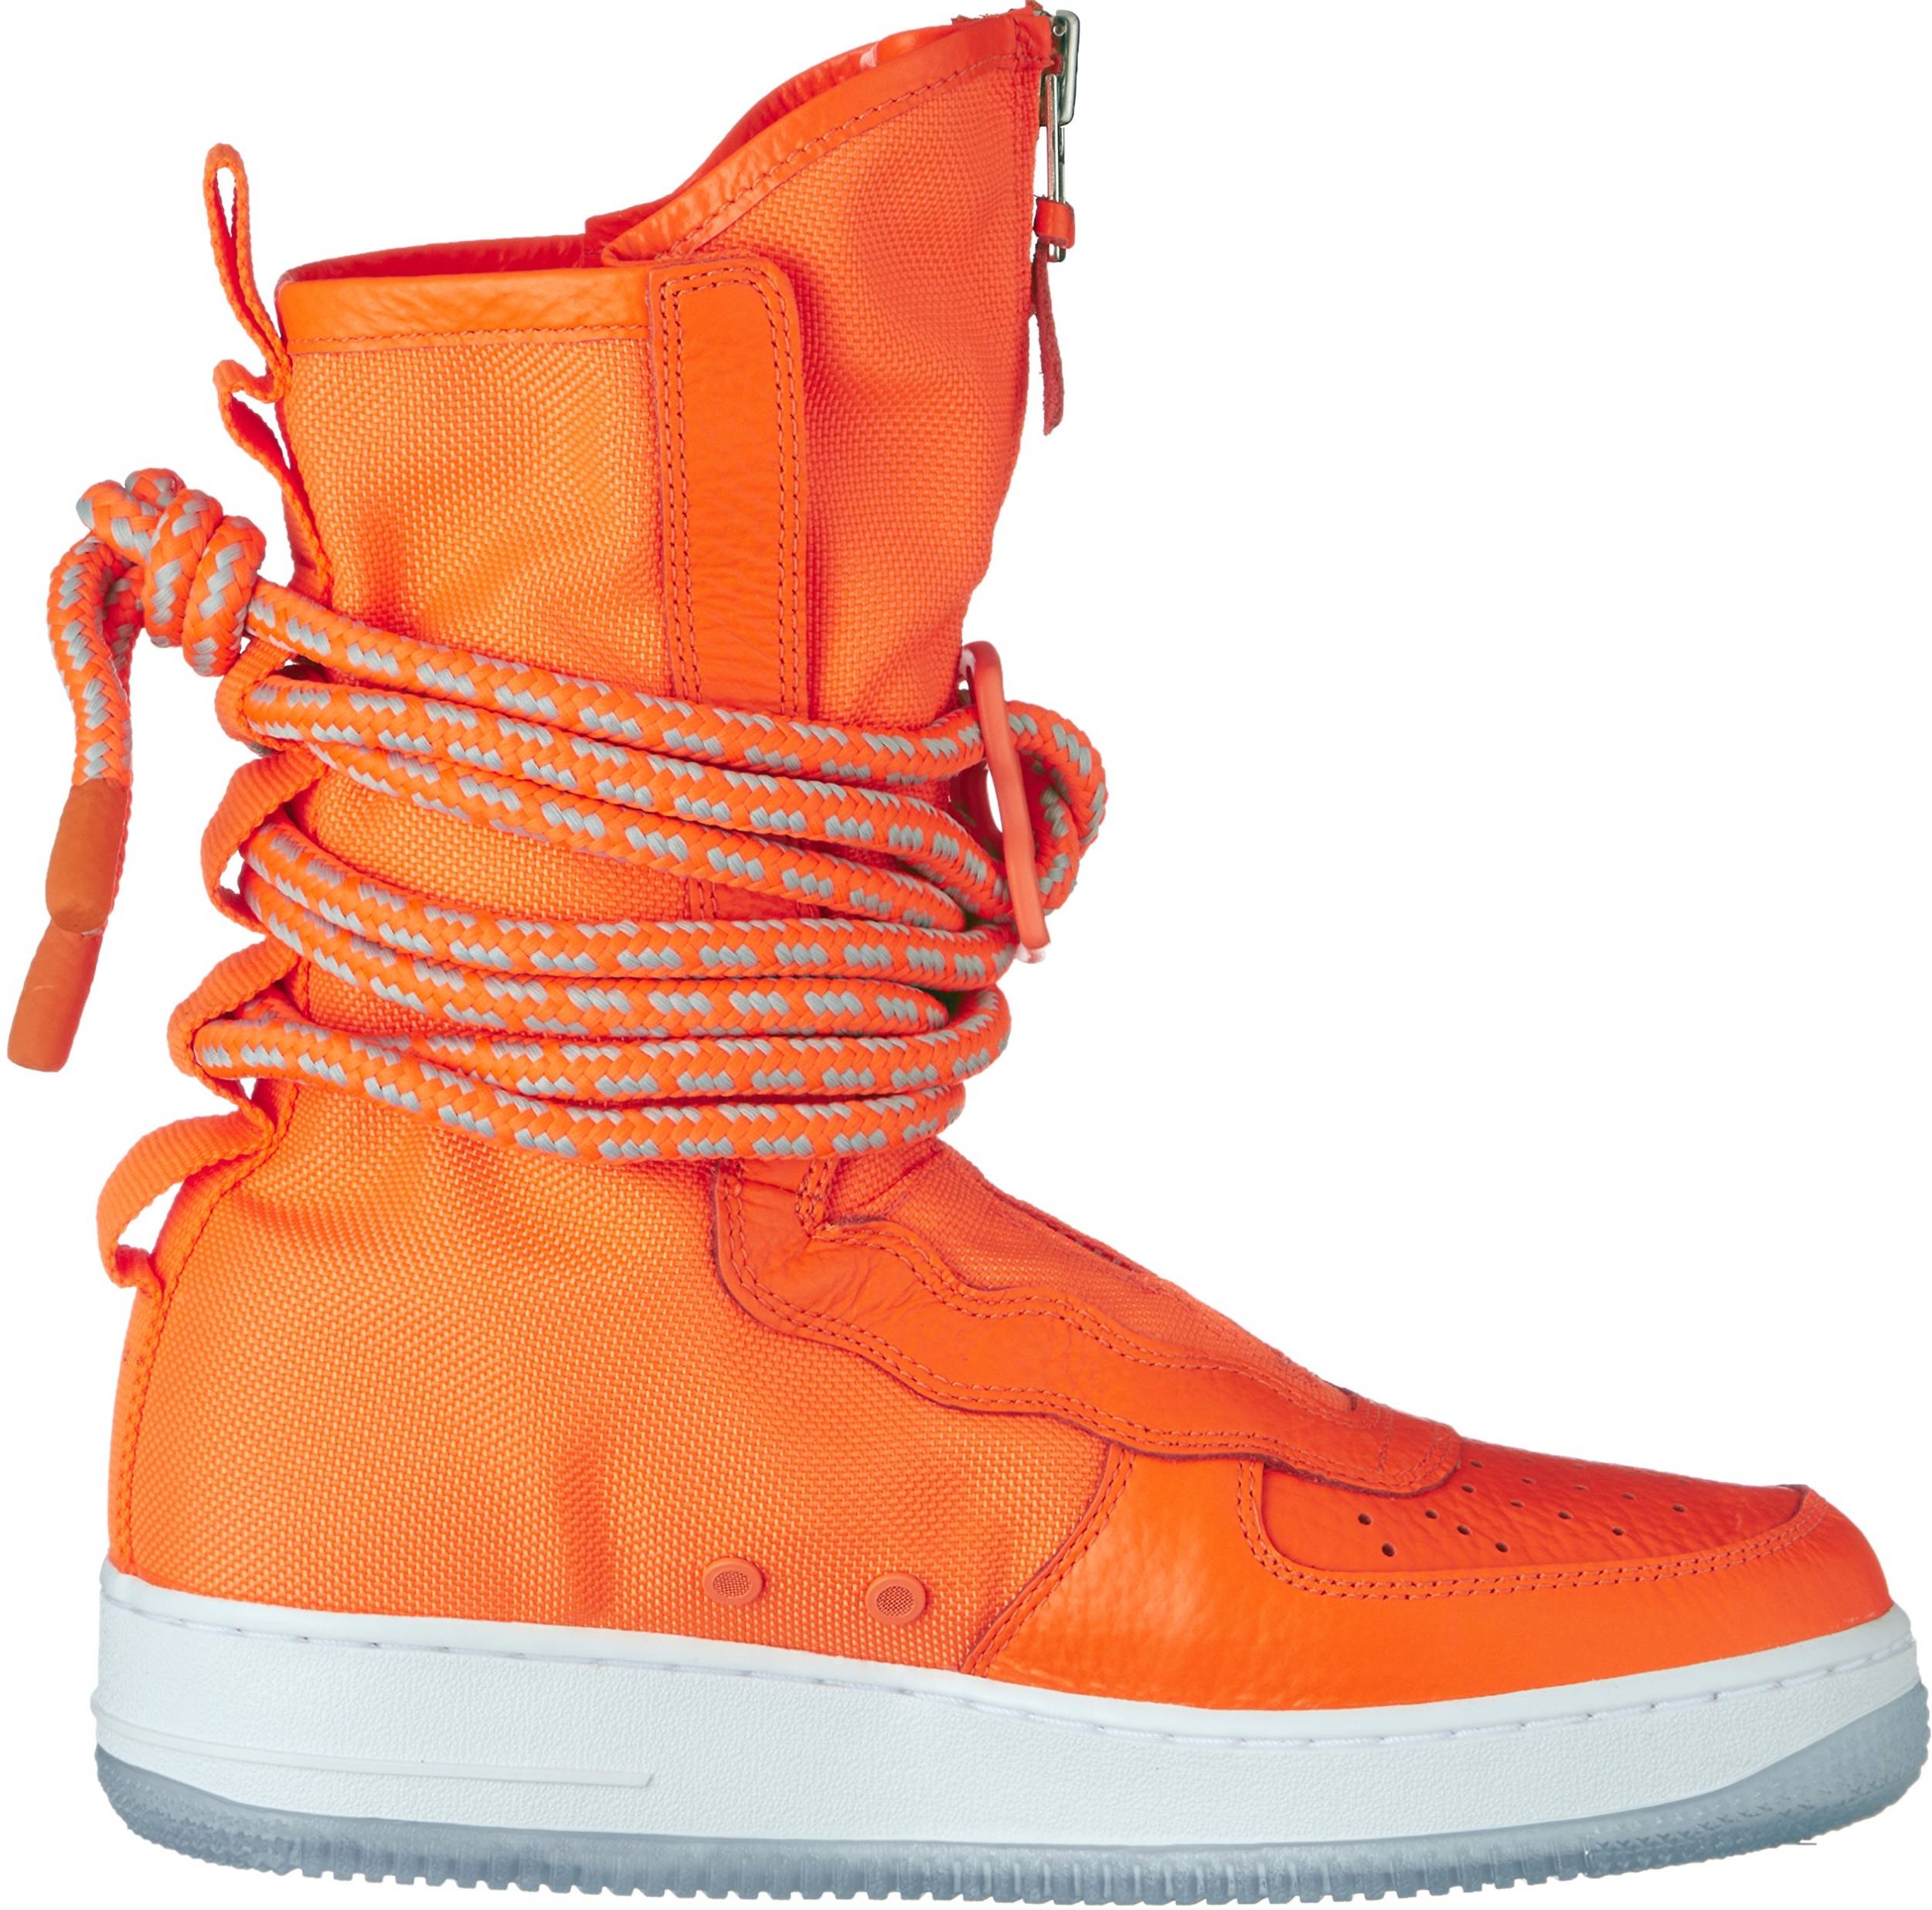 10+ Orange high top sneakers: Save up to 51% | RunRepeat